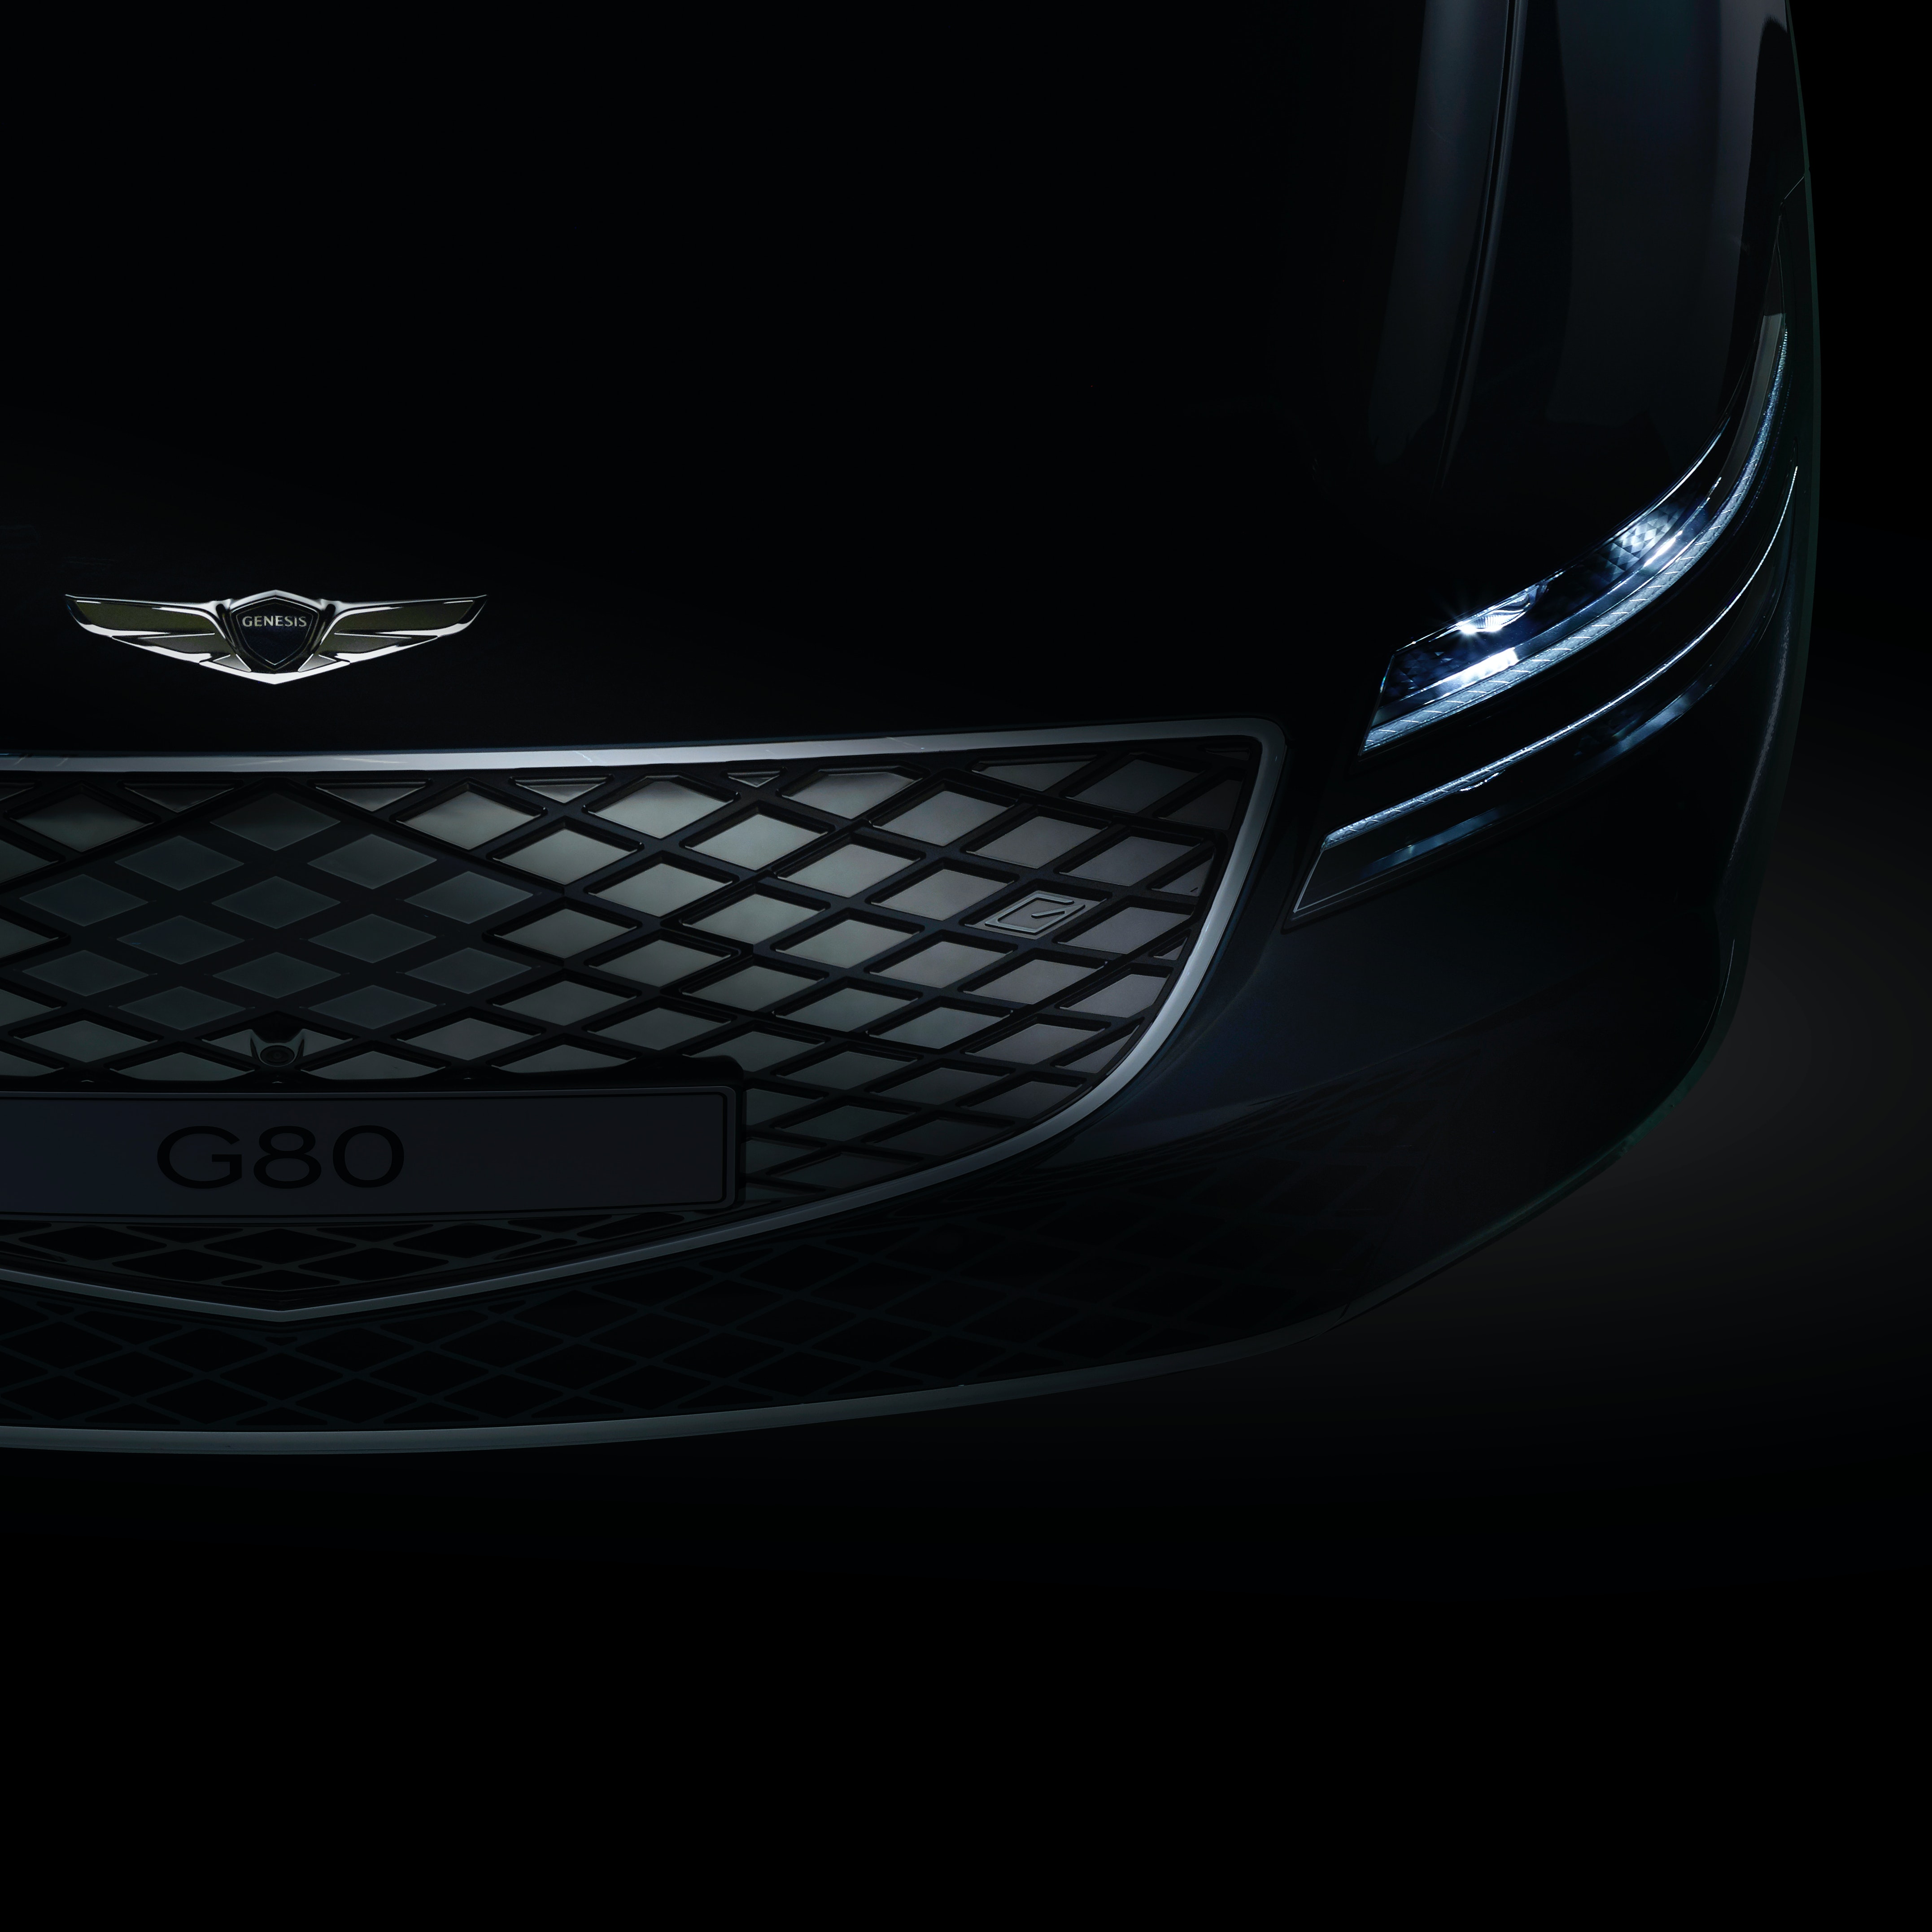 Close Up Of A Hyundai Genesis G80 · Free